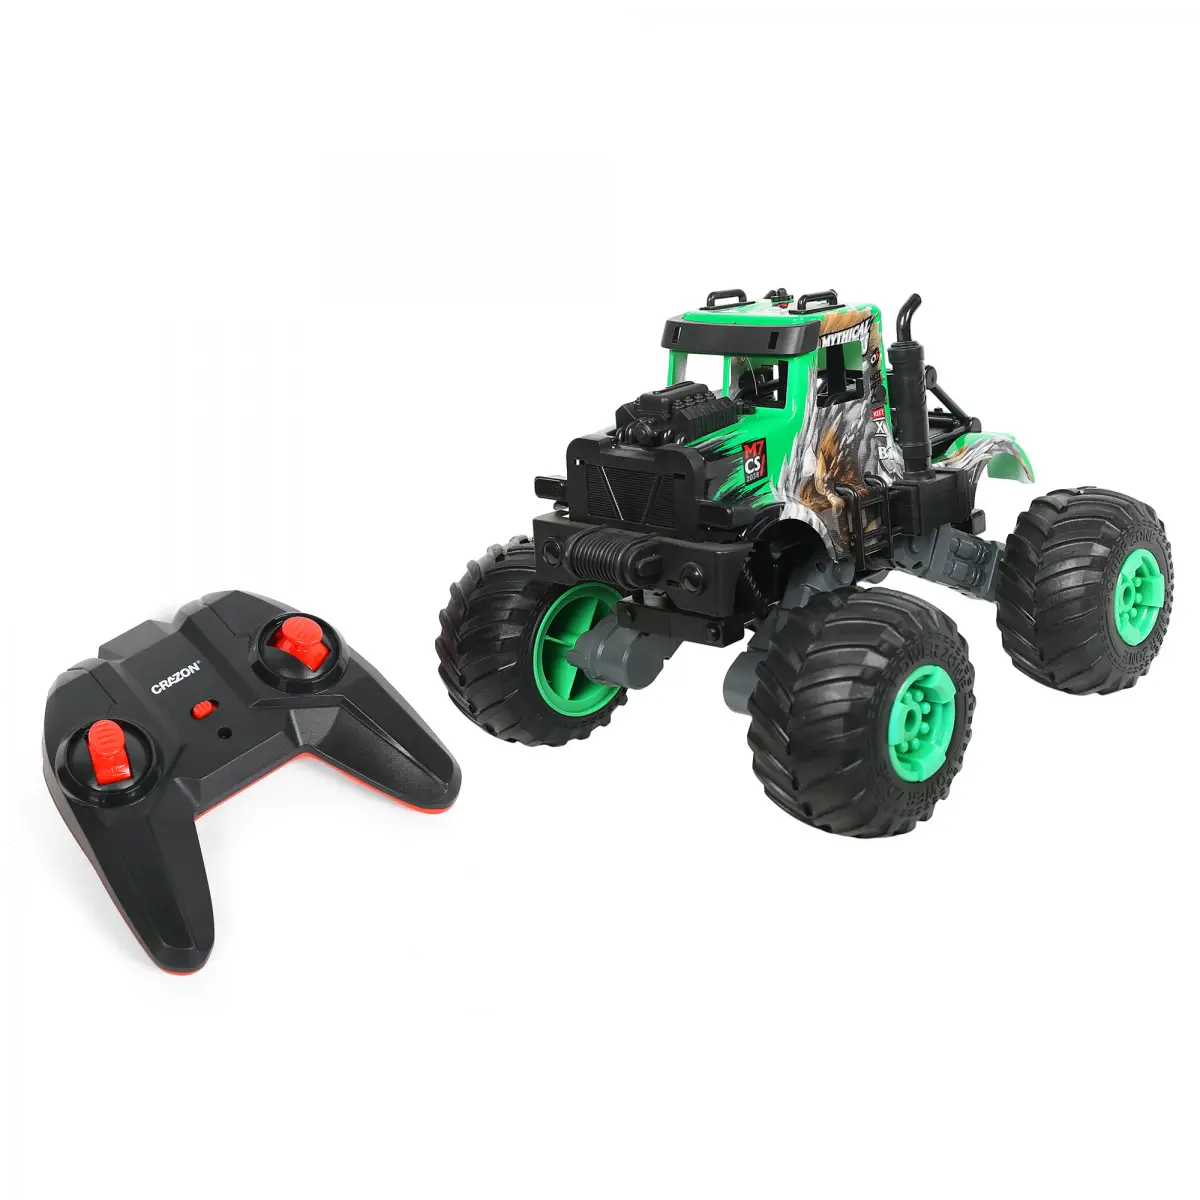 Ralleyz Monster Racing Car, 4 Wheel Drive, Remote Control Toys, 8Y+, Green